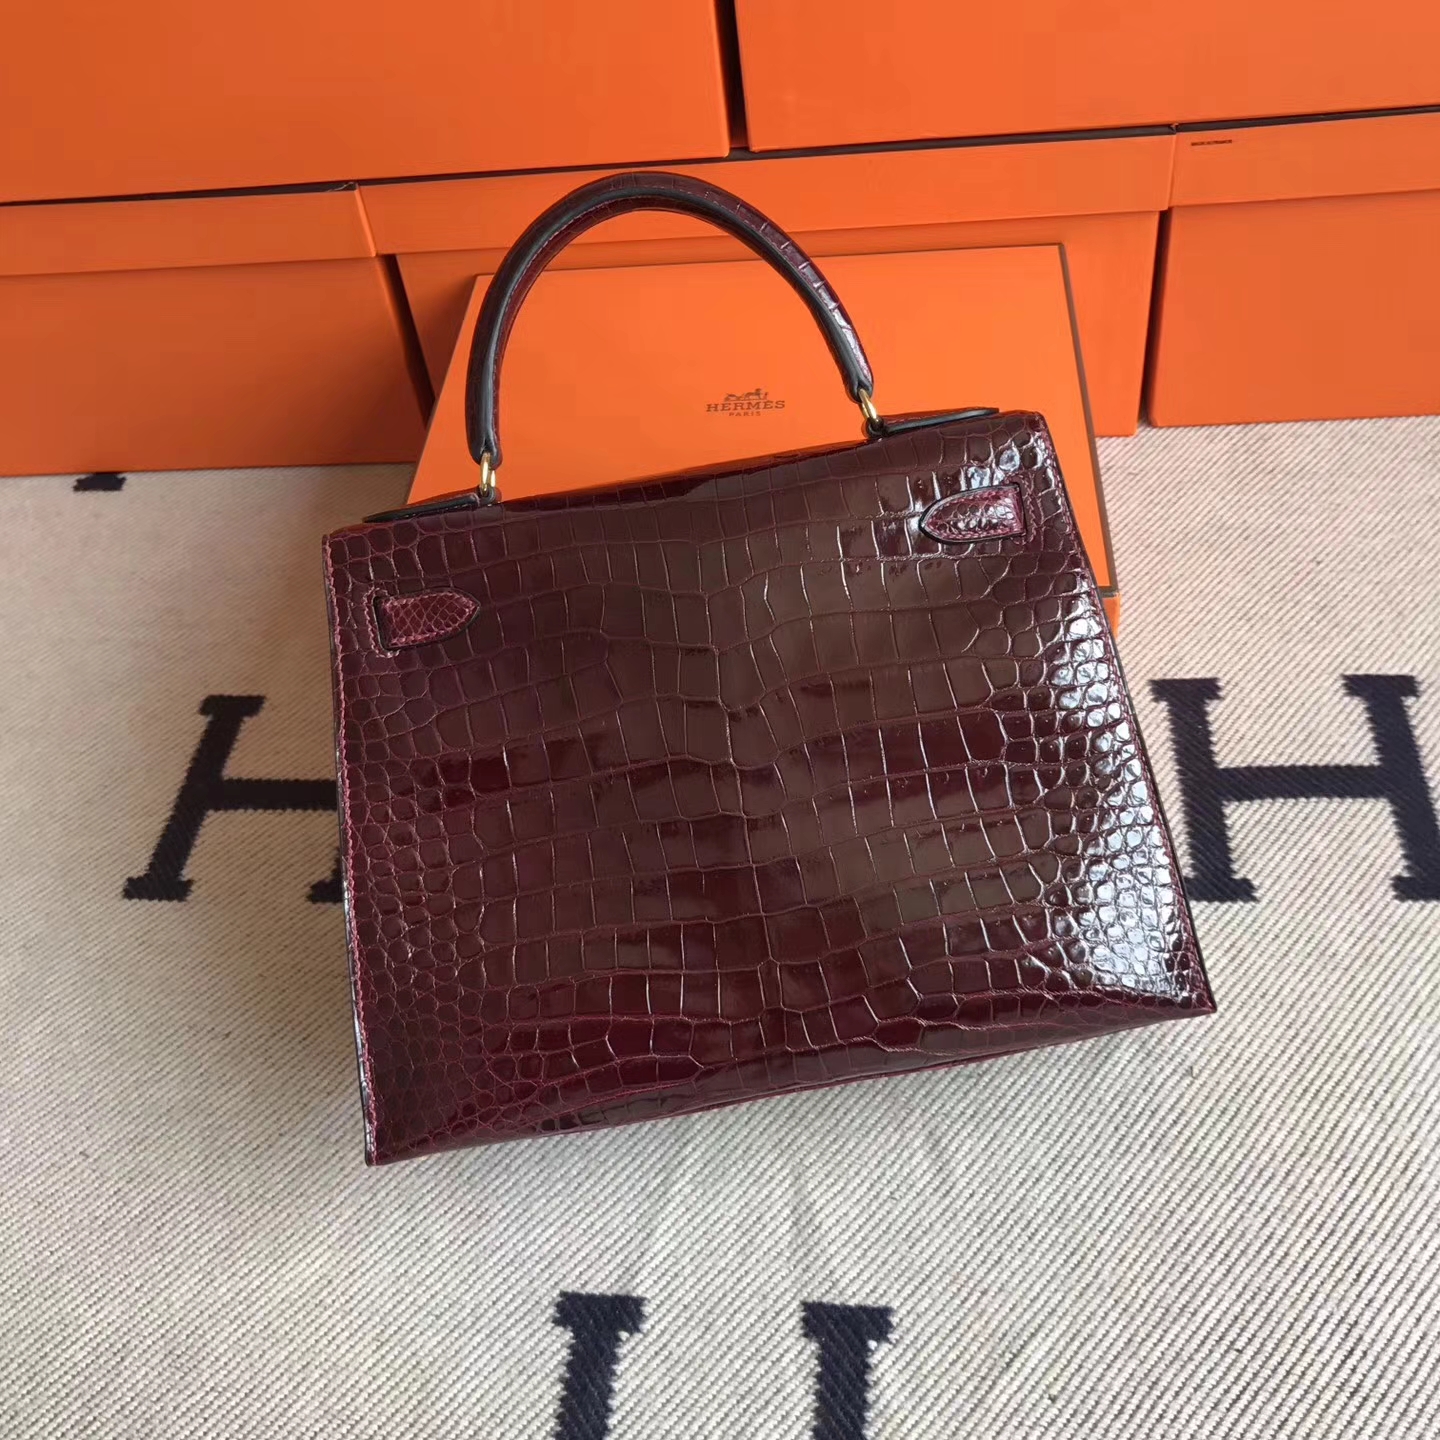 Discount Hermes CK57 Bordeaux Crocodile Shiny Leather Kelly28cm Bag